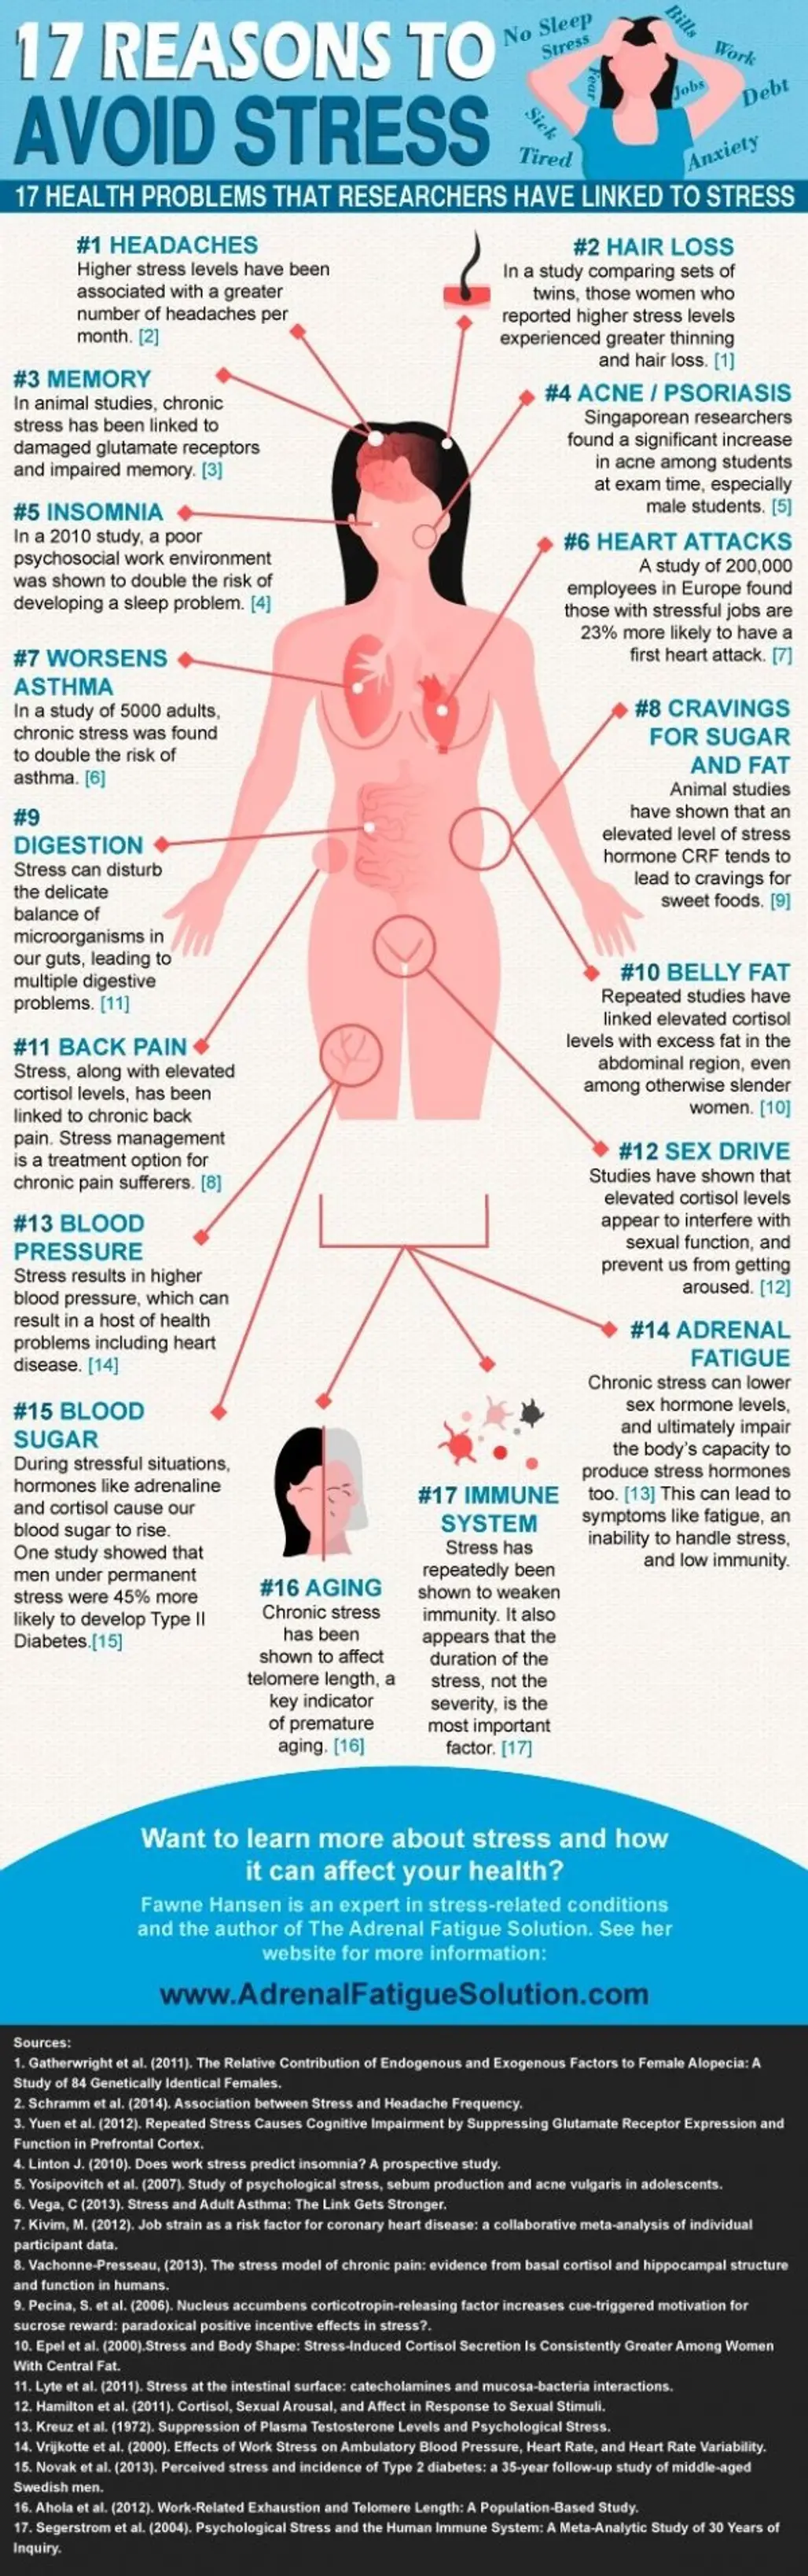 17 Reasons to Avoid Stress